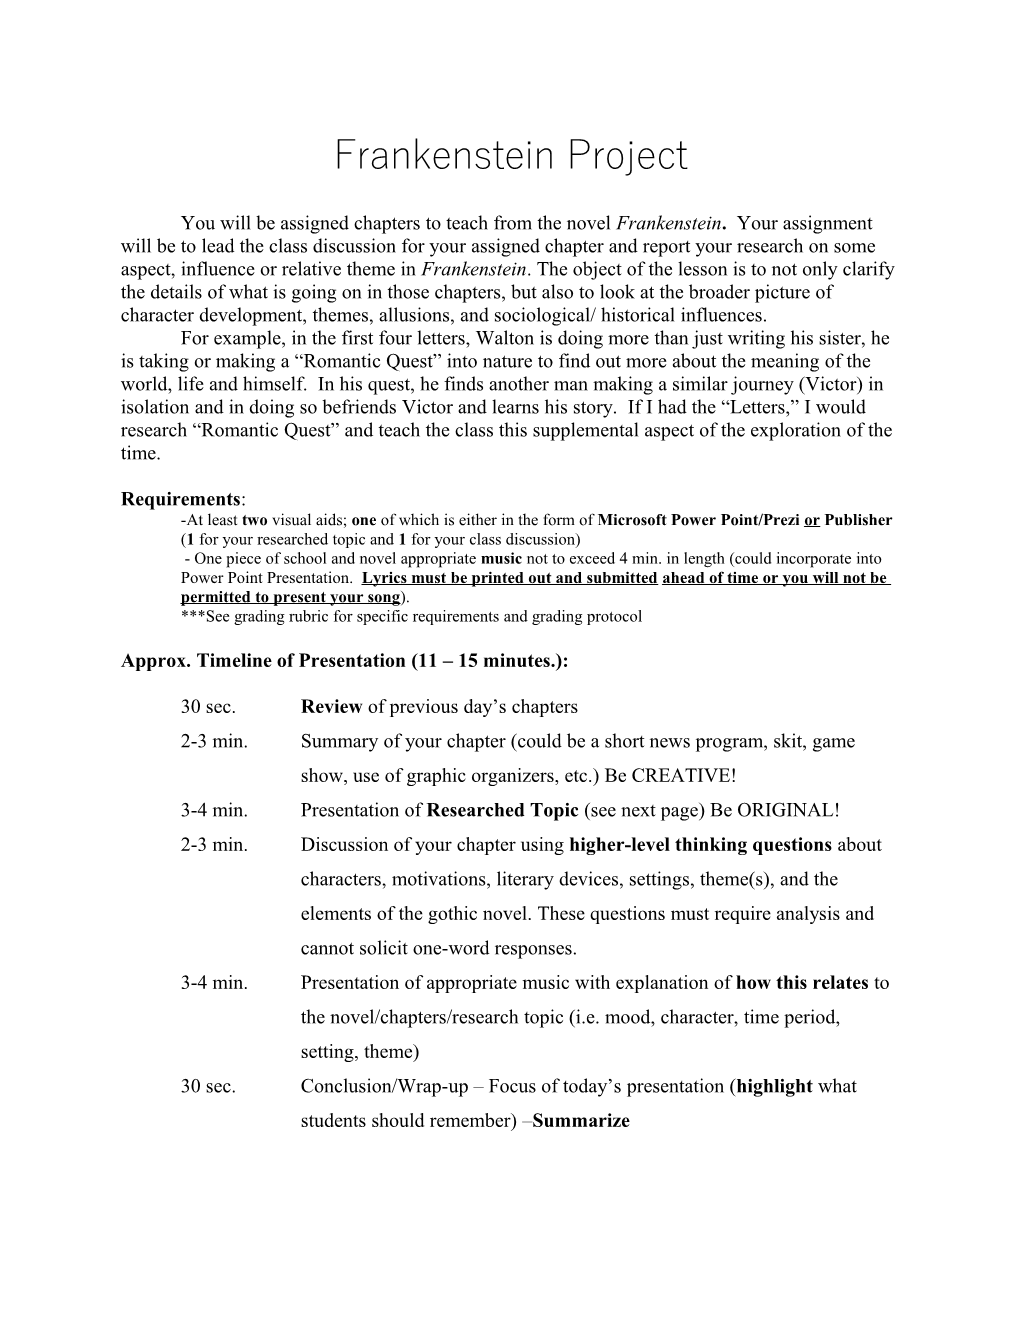 Frankenstein Group Project